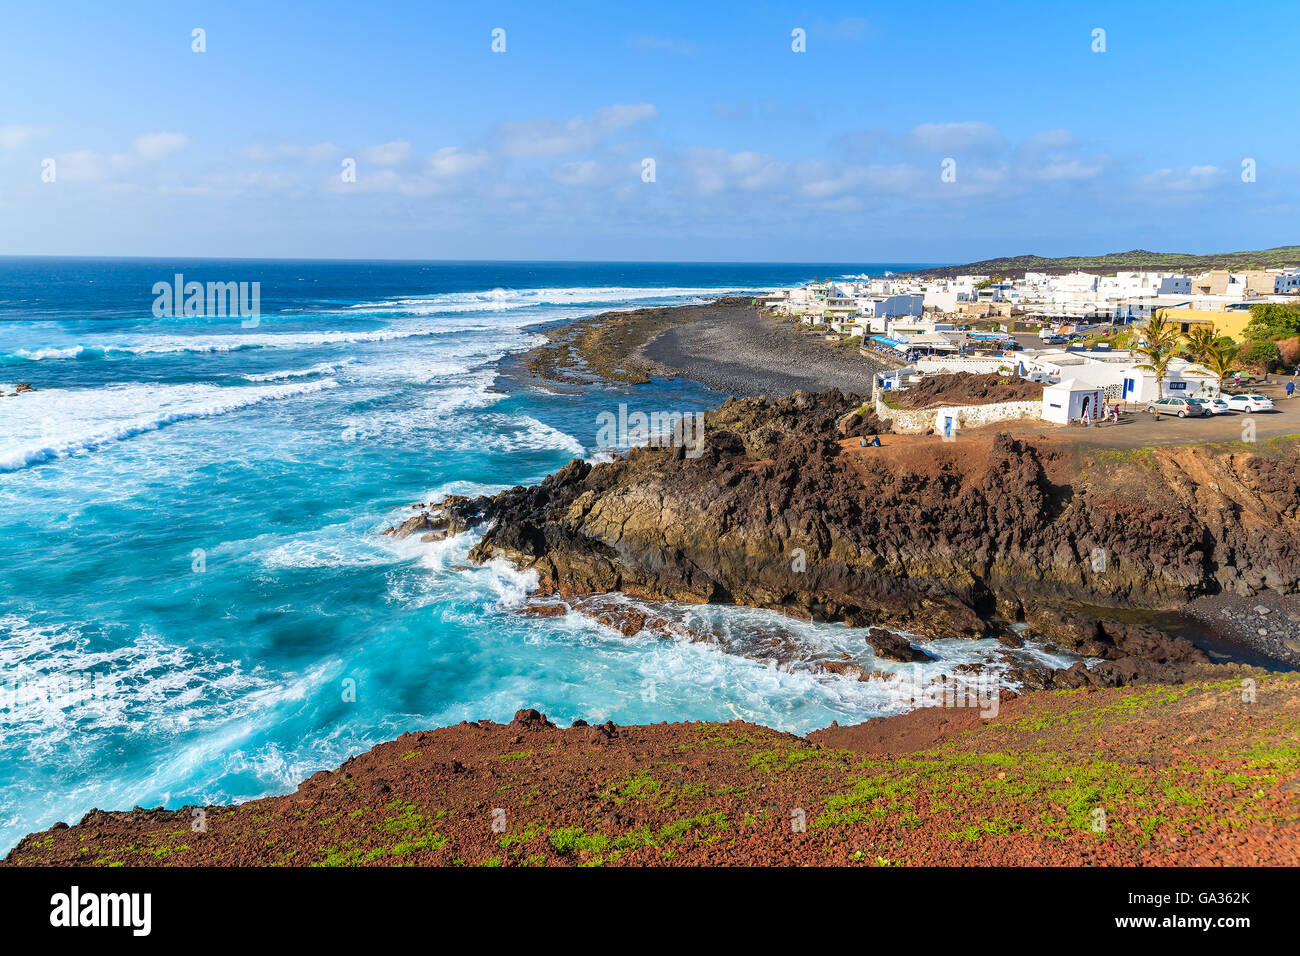 View of El Golfo village and blue ocean on coast of Lanzarote island, Spain Stock Photo